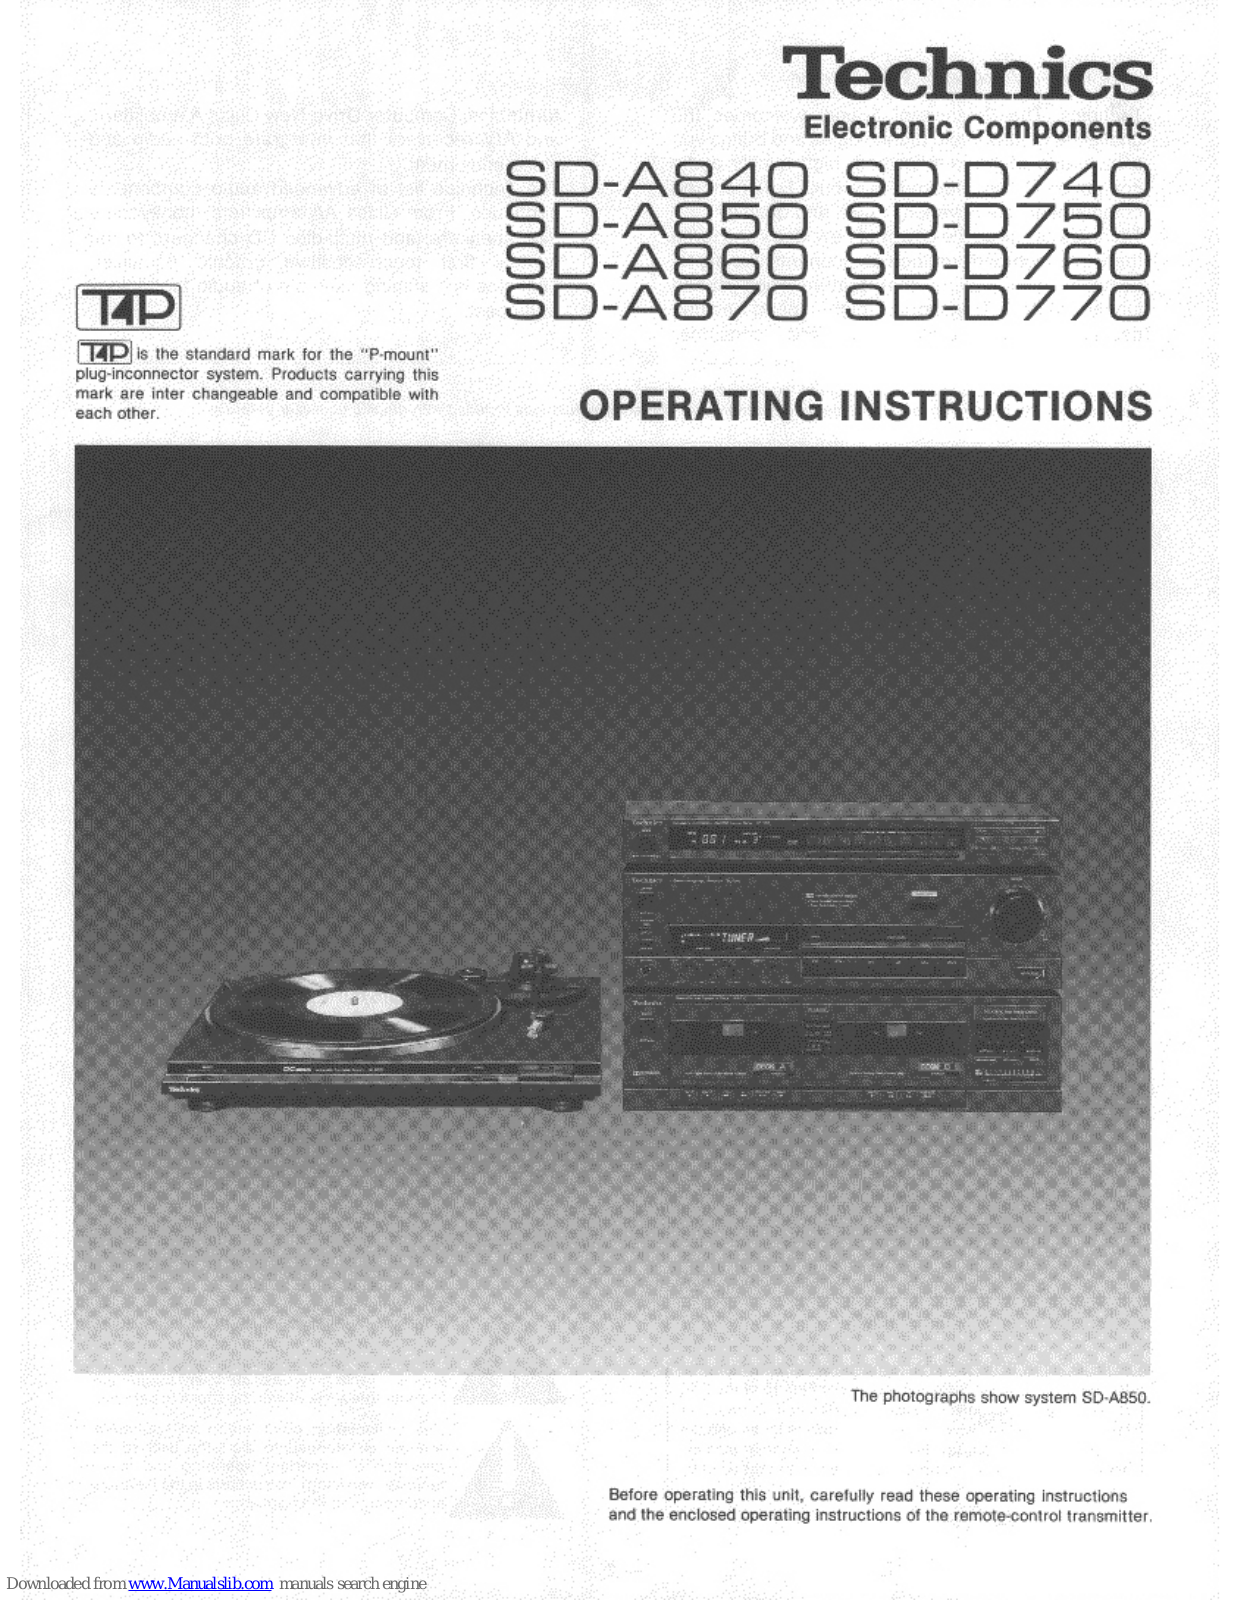 Technics SD-A840, SD-A860, SD-A870, SD-D740, SD-D750 Operating Instructions Manual